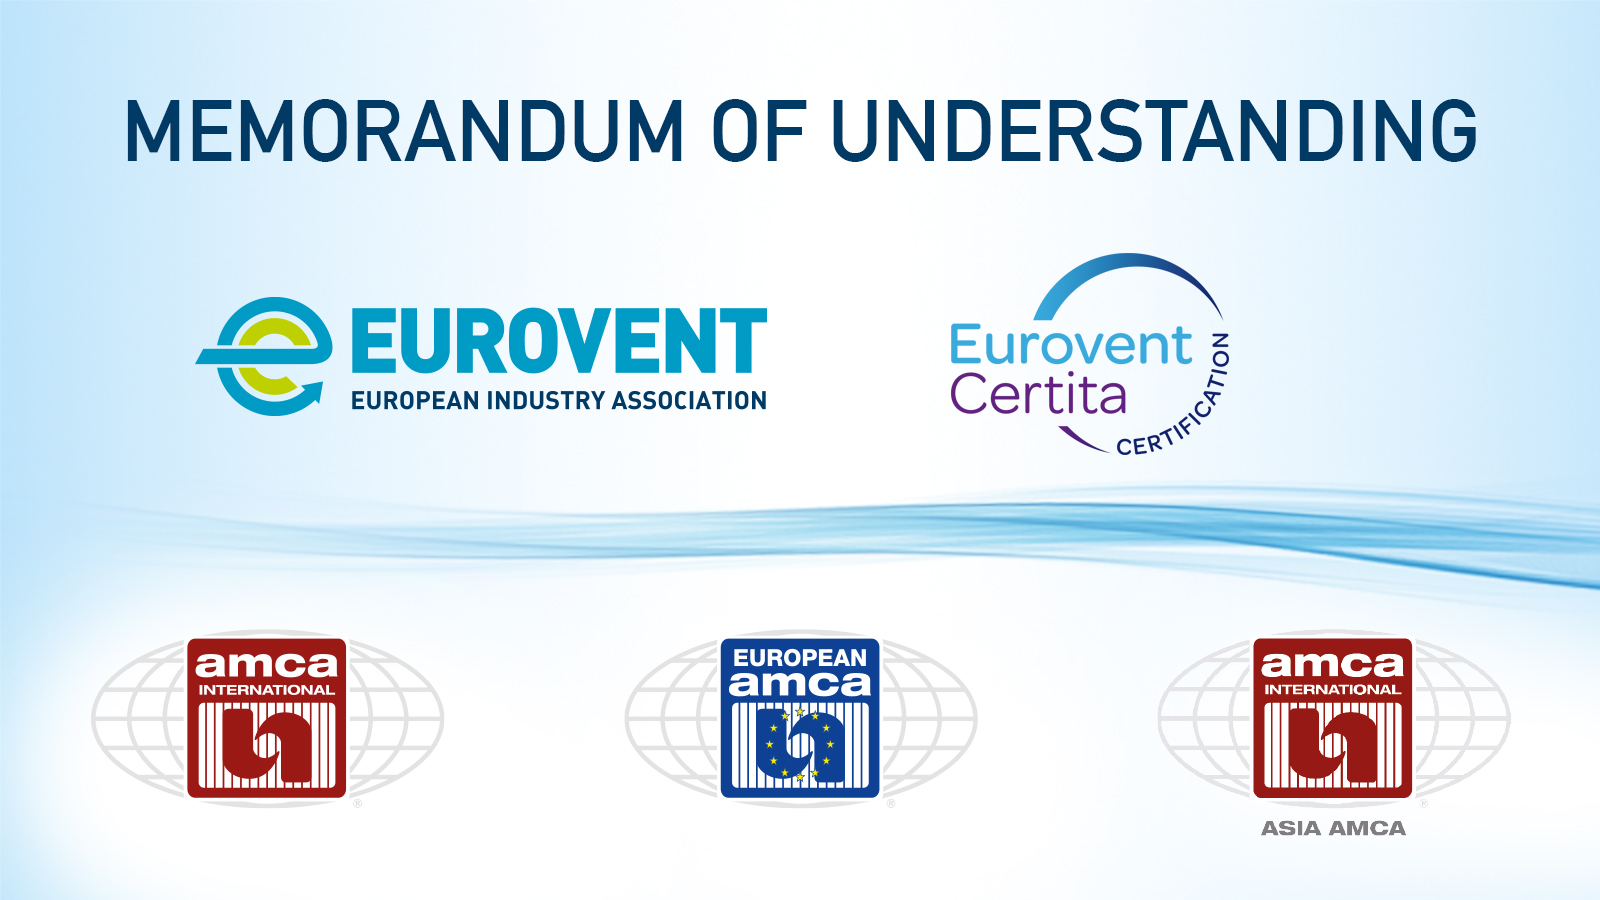 2023-02-22 - AMCA and Eurovent sign Memorandum of Understanding